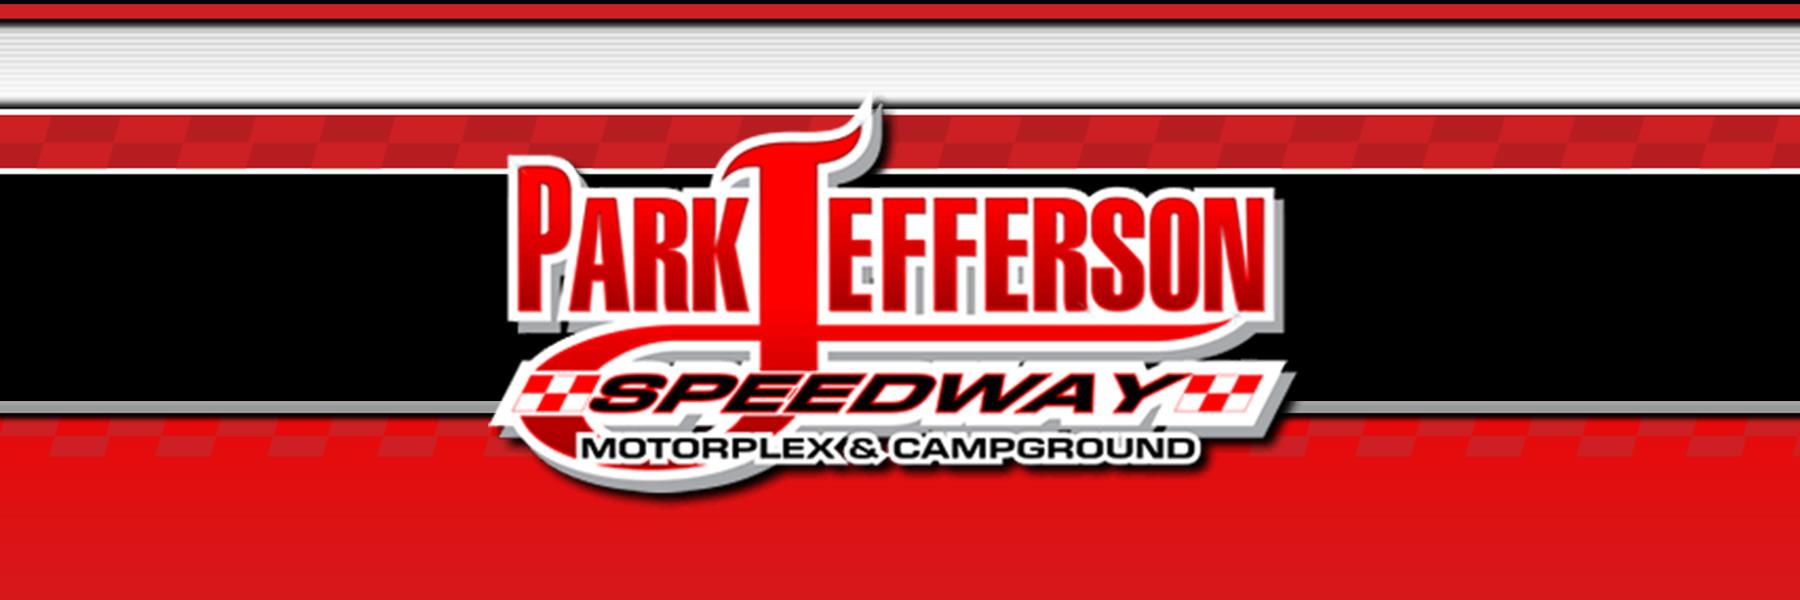 10/14/2022 - Park Jefferson International Speedway